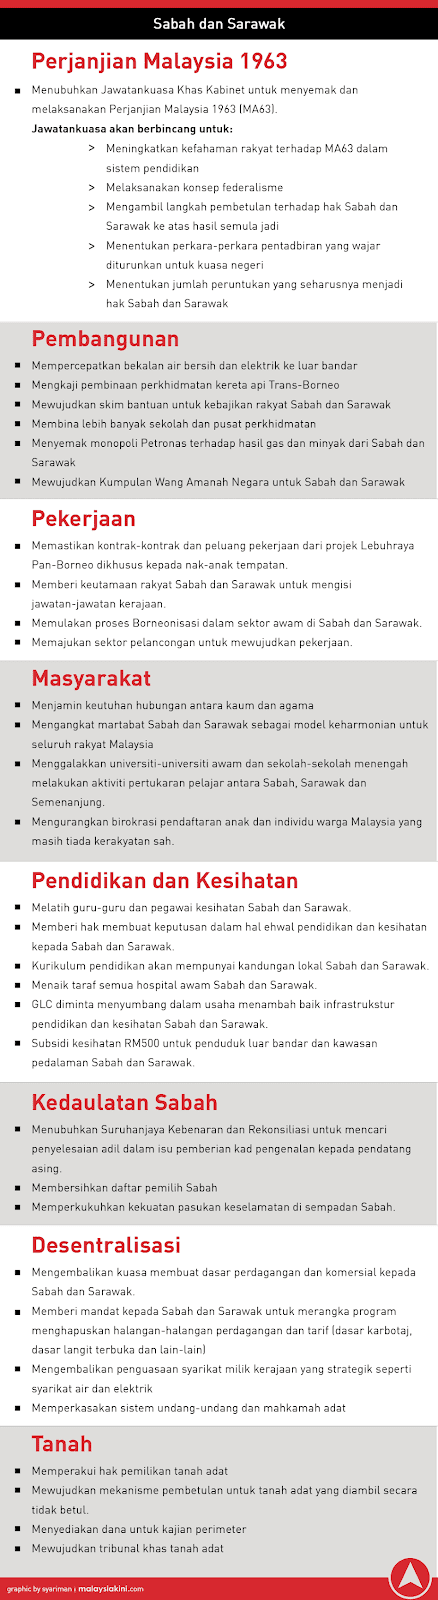 Keputusan Parlimen Malaysia 2018 & Manifesto Pakatan Harapan (PH)